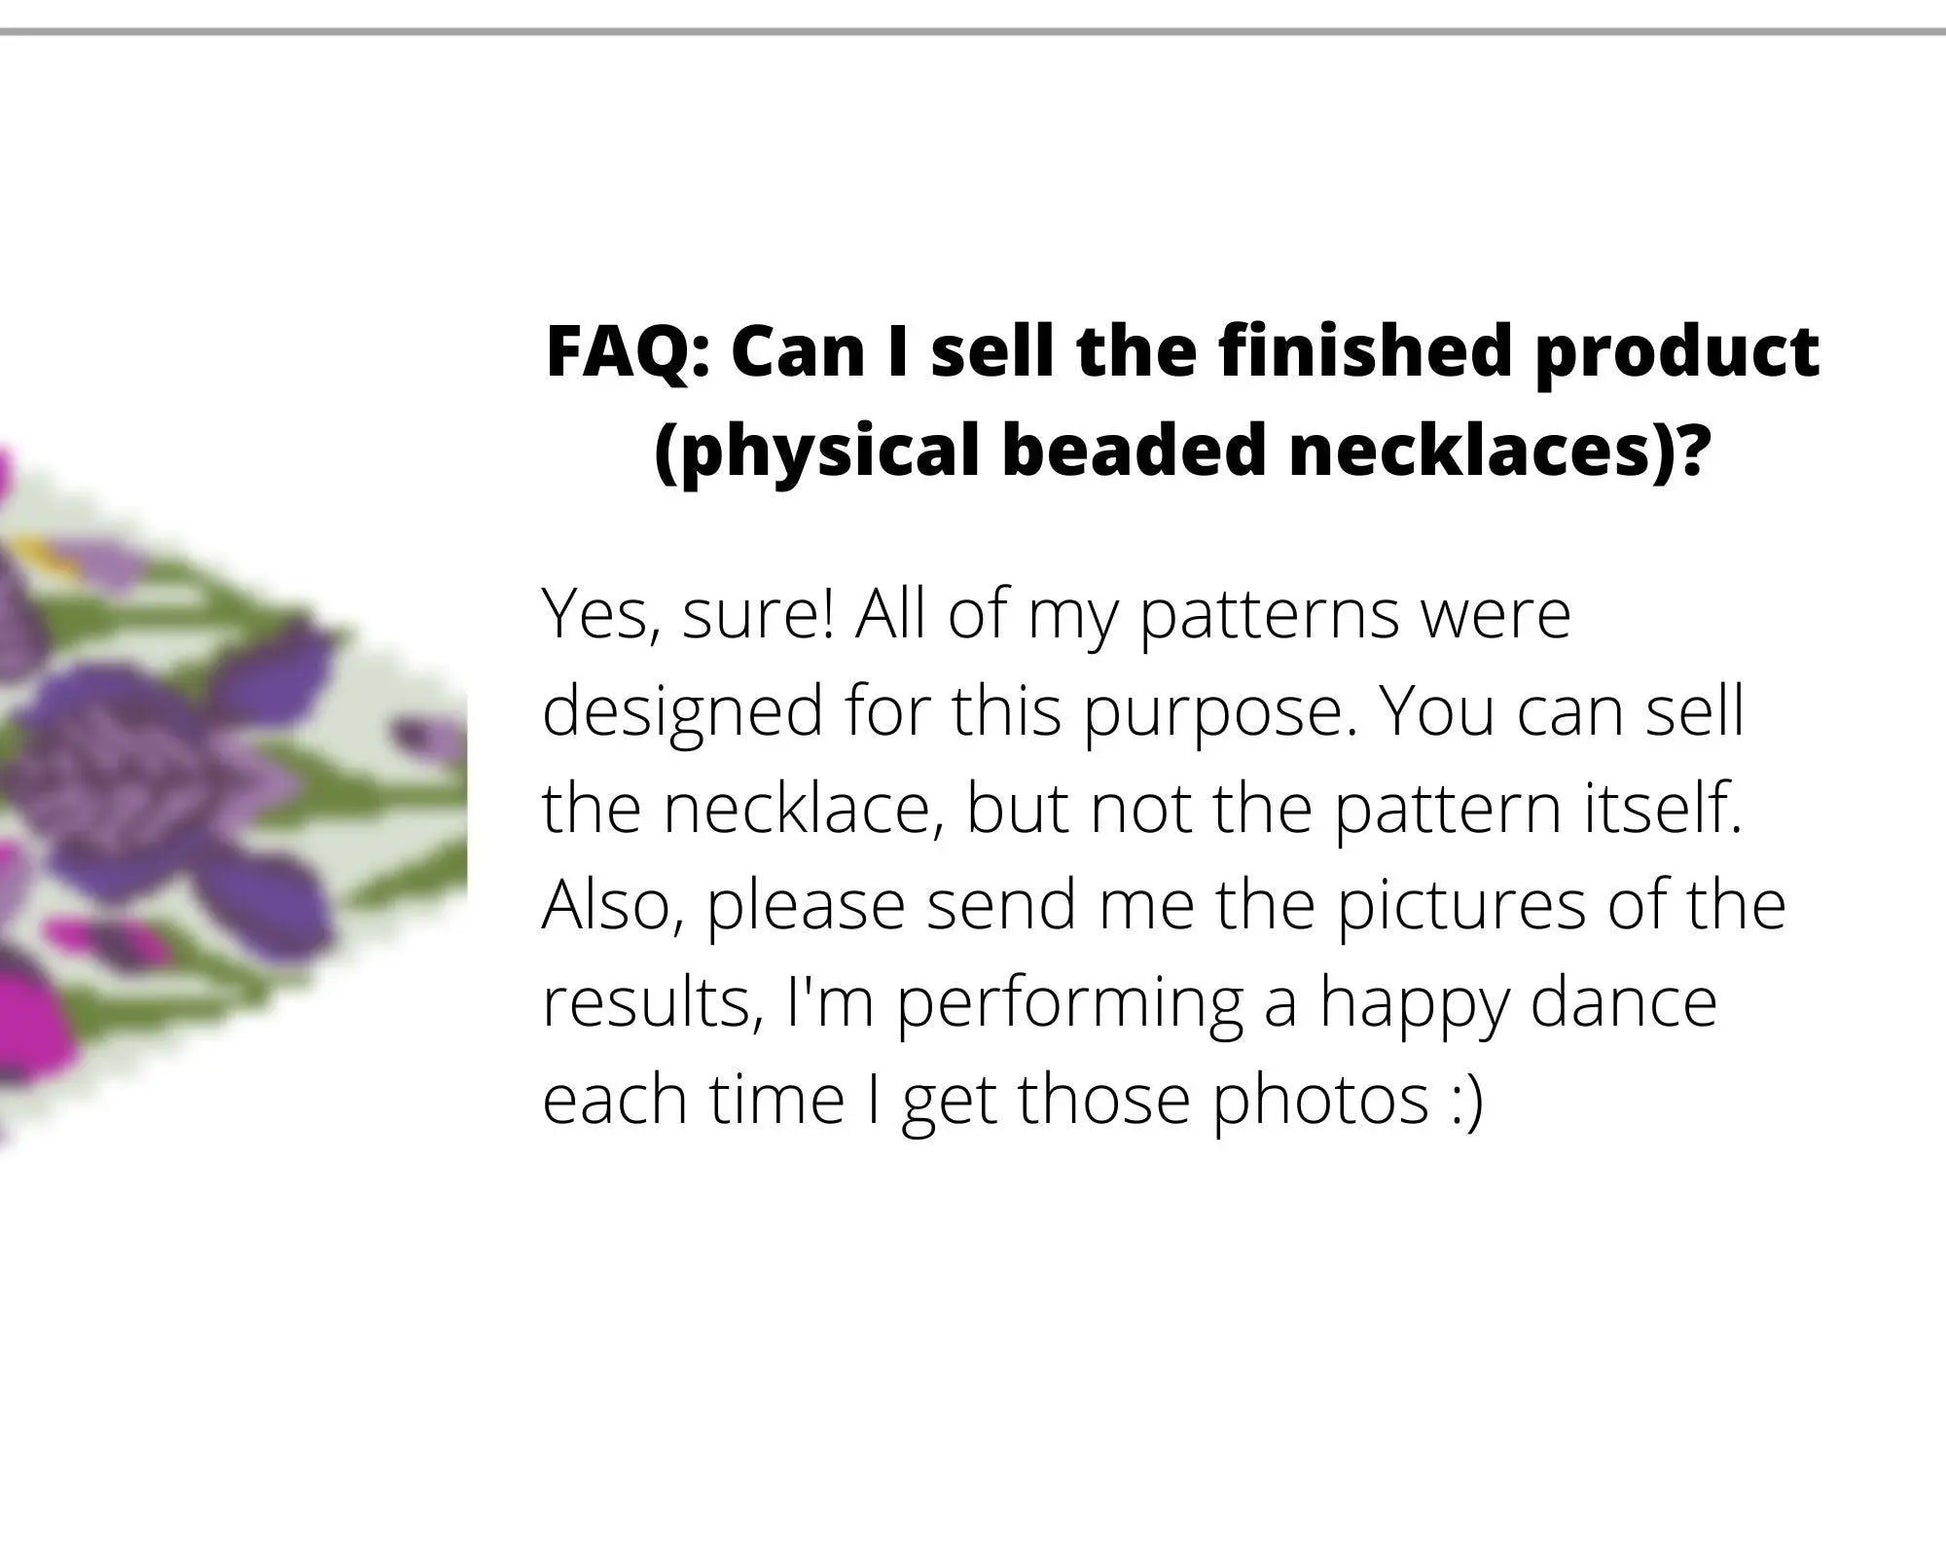 Iris Beaded Loom Fringe Necklace Pattern - DIY Boho Jewelry - NikoBeadsUA